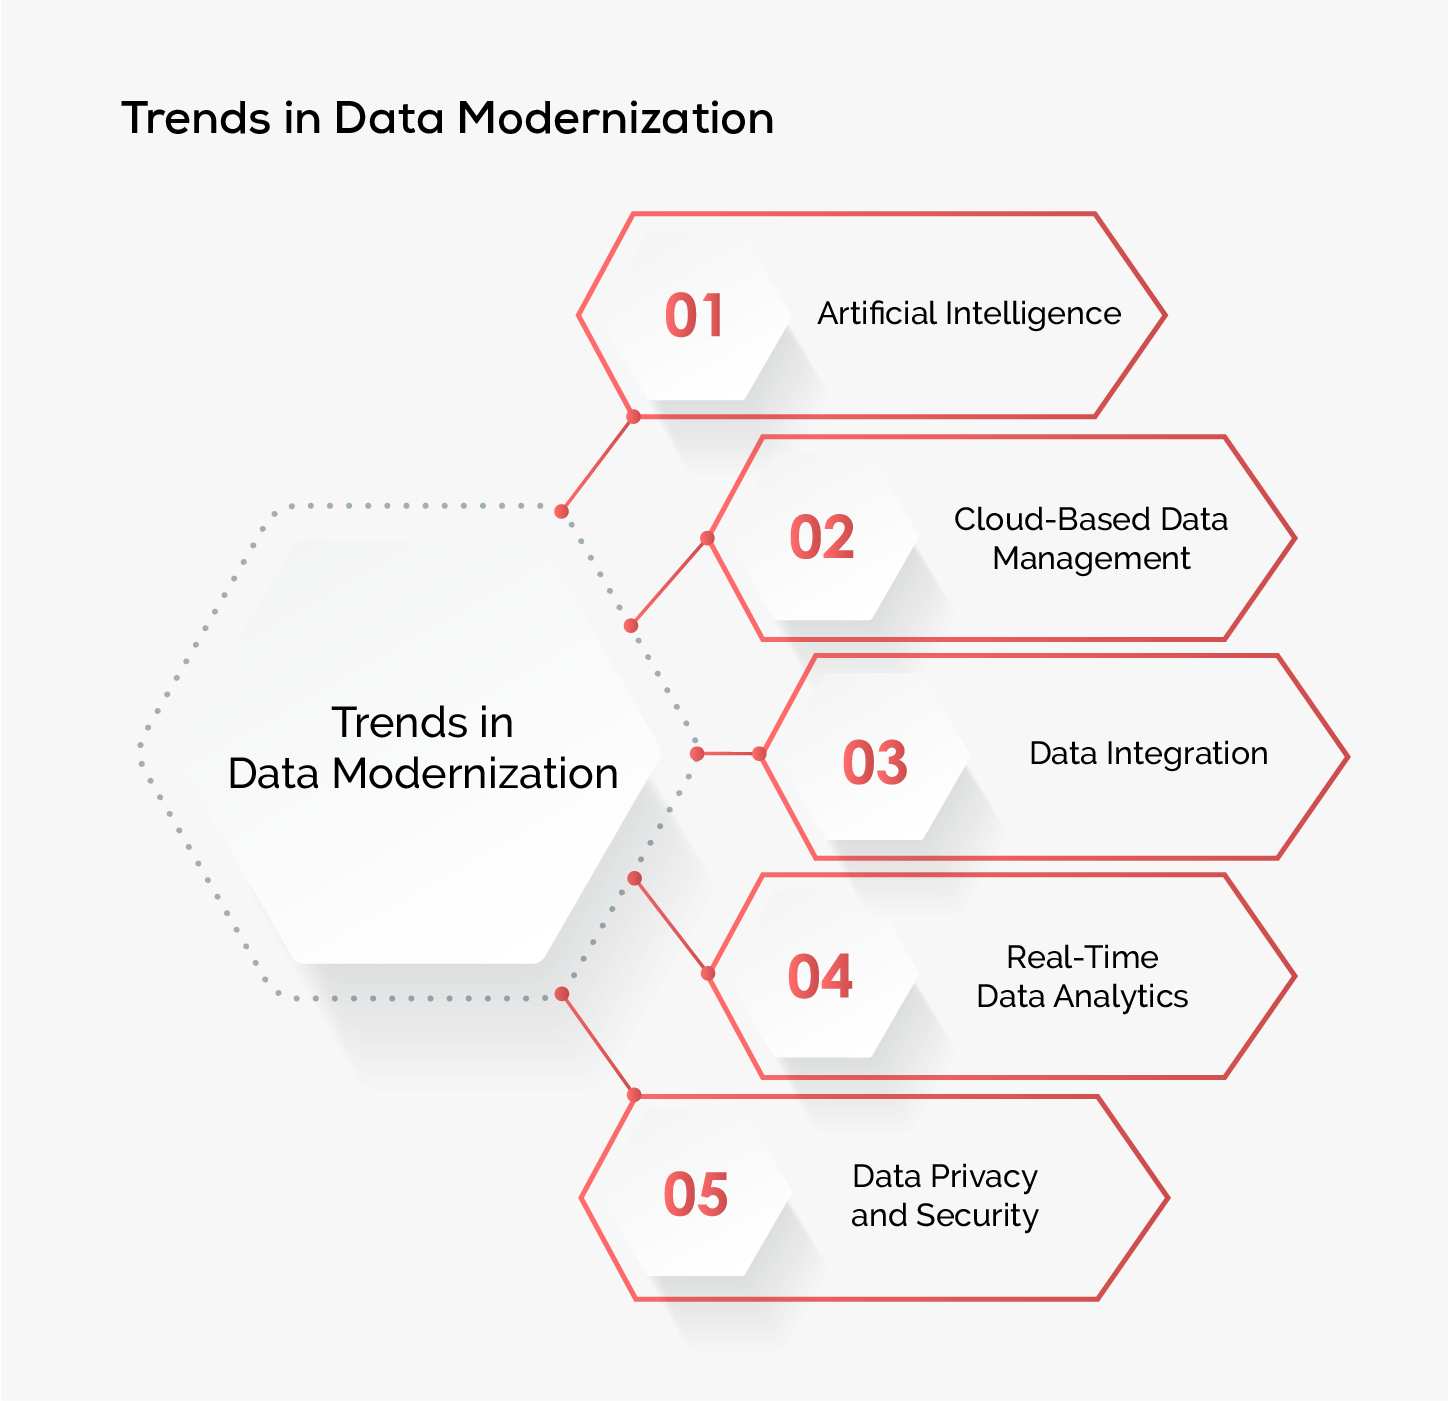 Trends in Data Modernization